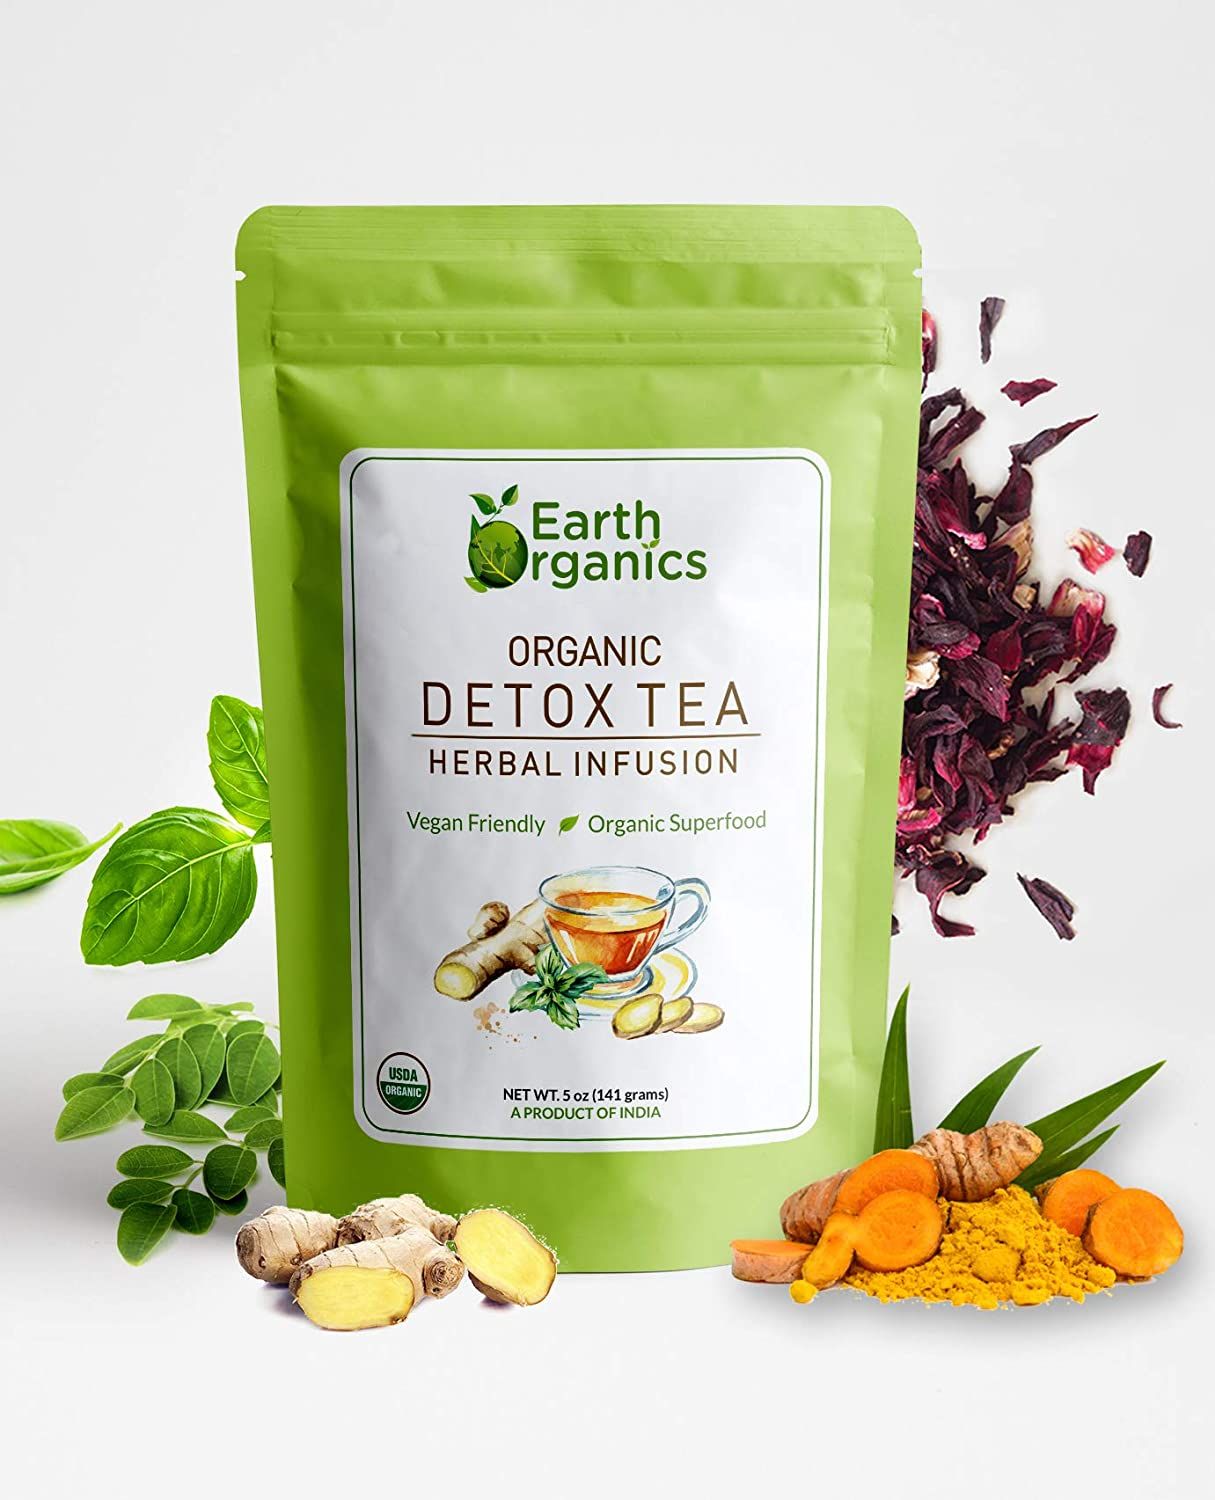 Earth Organics Organic Detox Tea Image